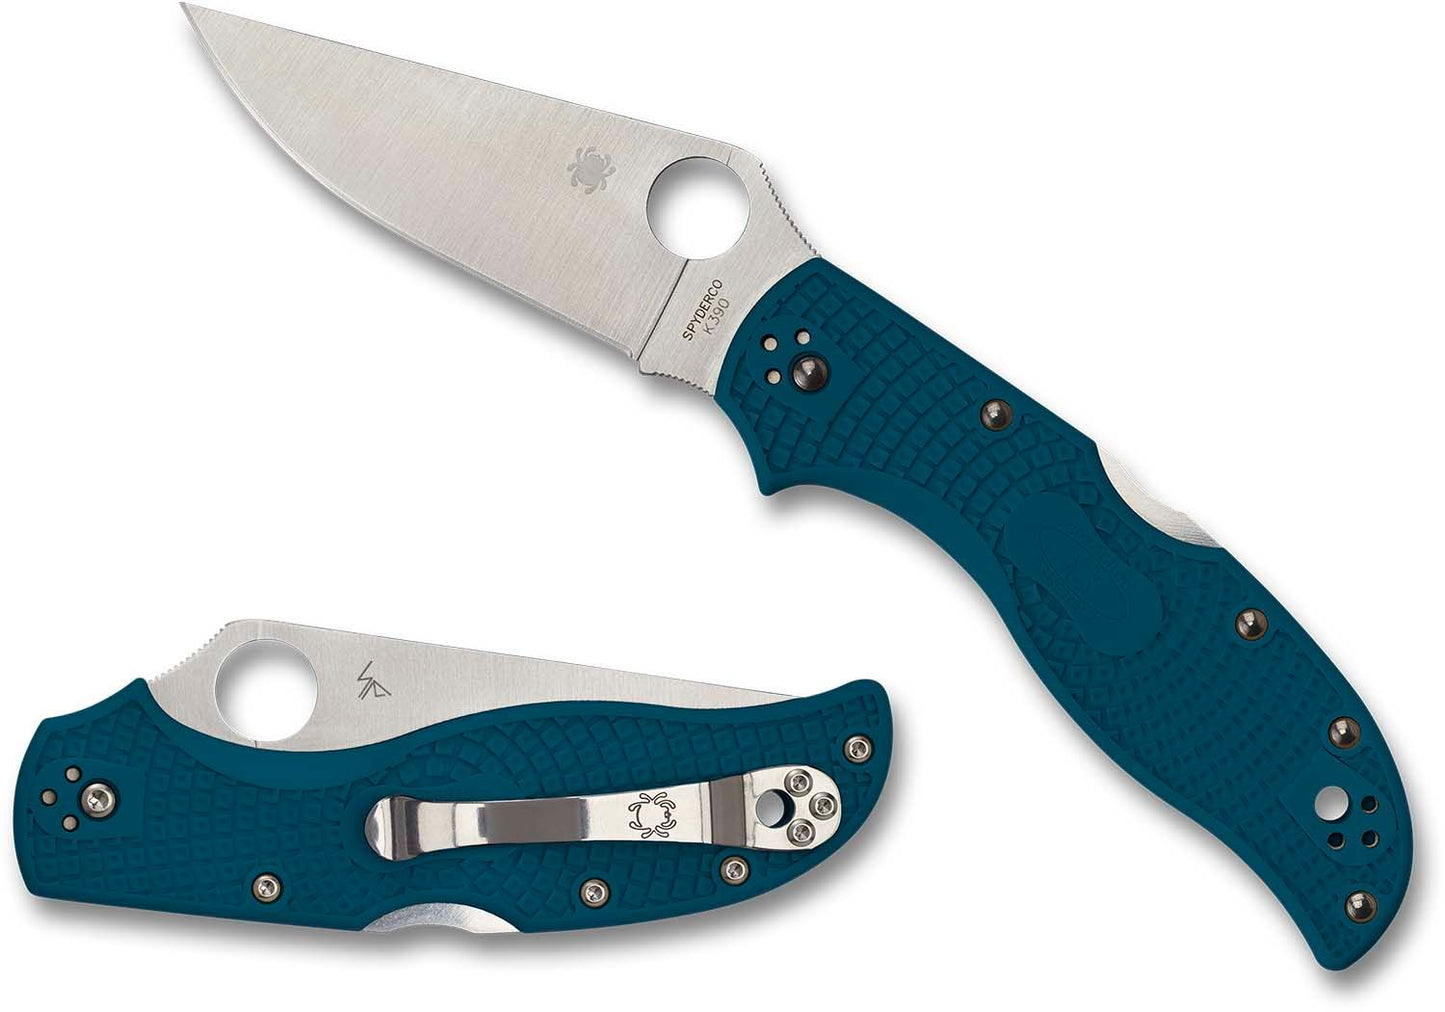 Spyderco Stretch 2 Lightweight Folding Knife 3.45" K390 Satin Plain Blade, Blue FRN Handles - C90FP2K390 - SETI